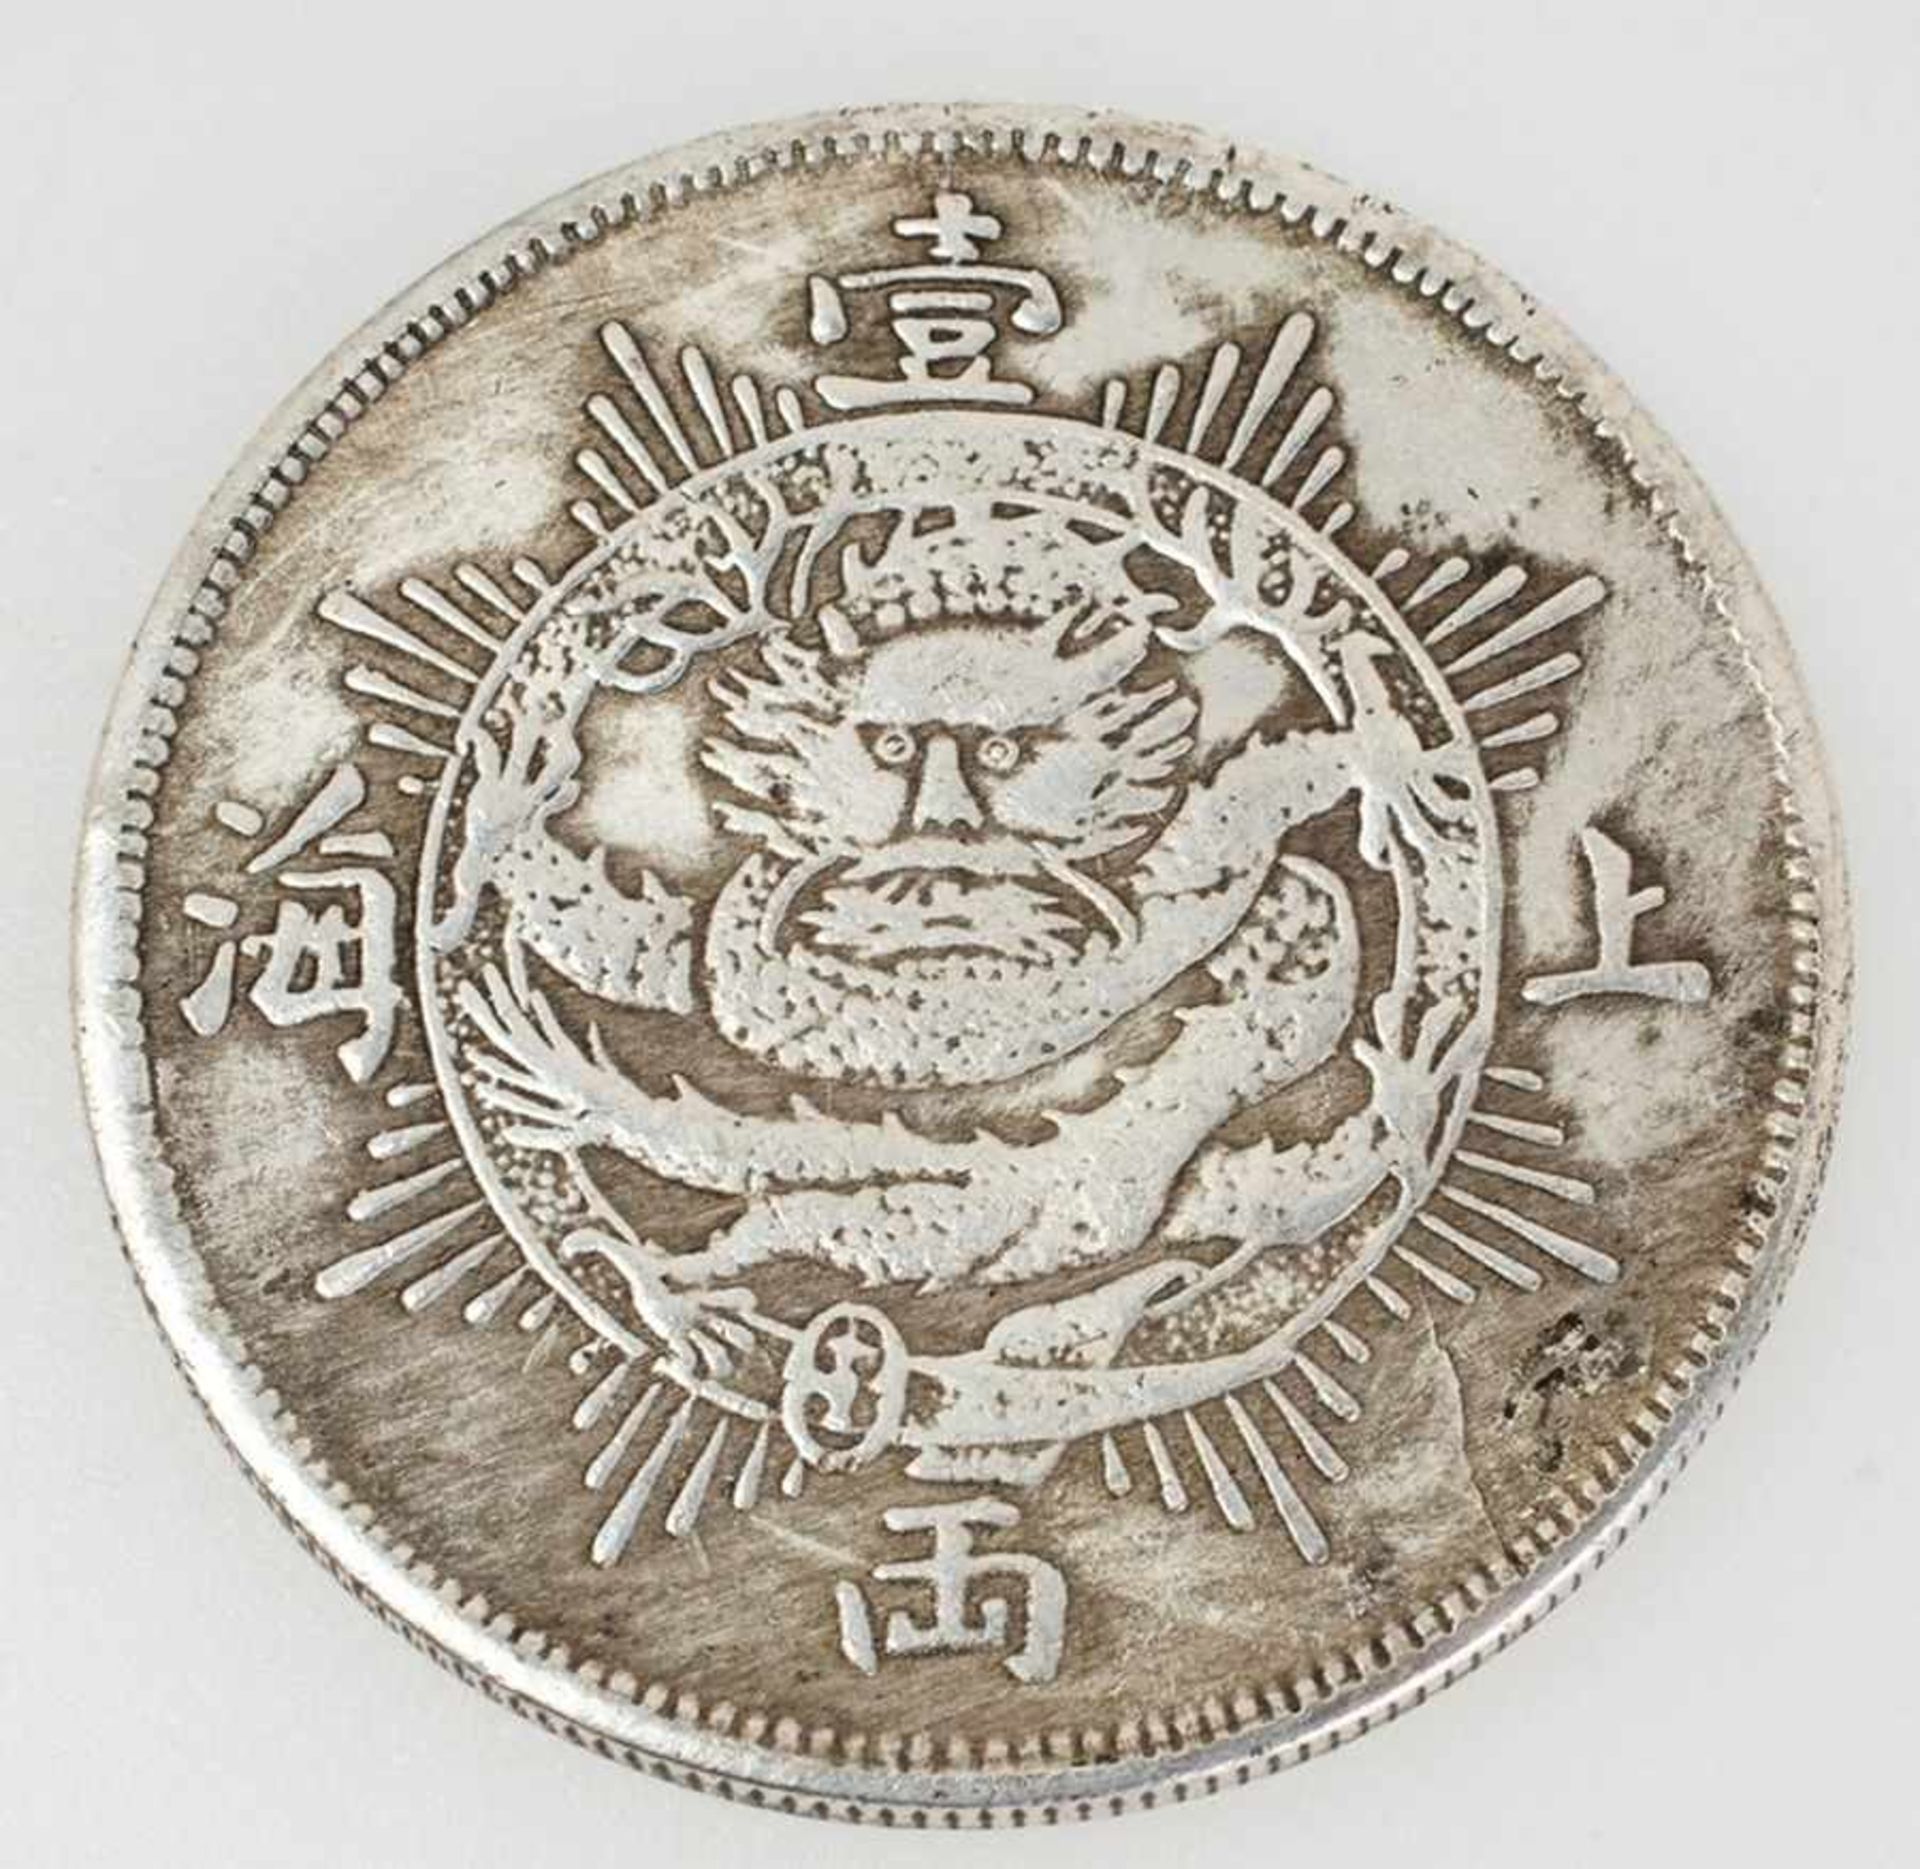 Chinesischer Silber-Tael Hongkong Shanghai-Tael für Hongkong mit britischem Wappen. Alters- u.